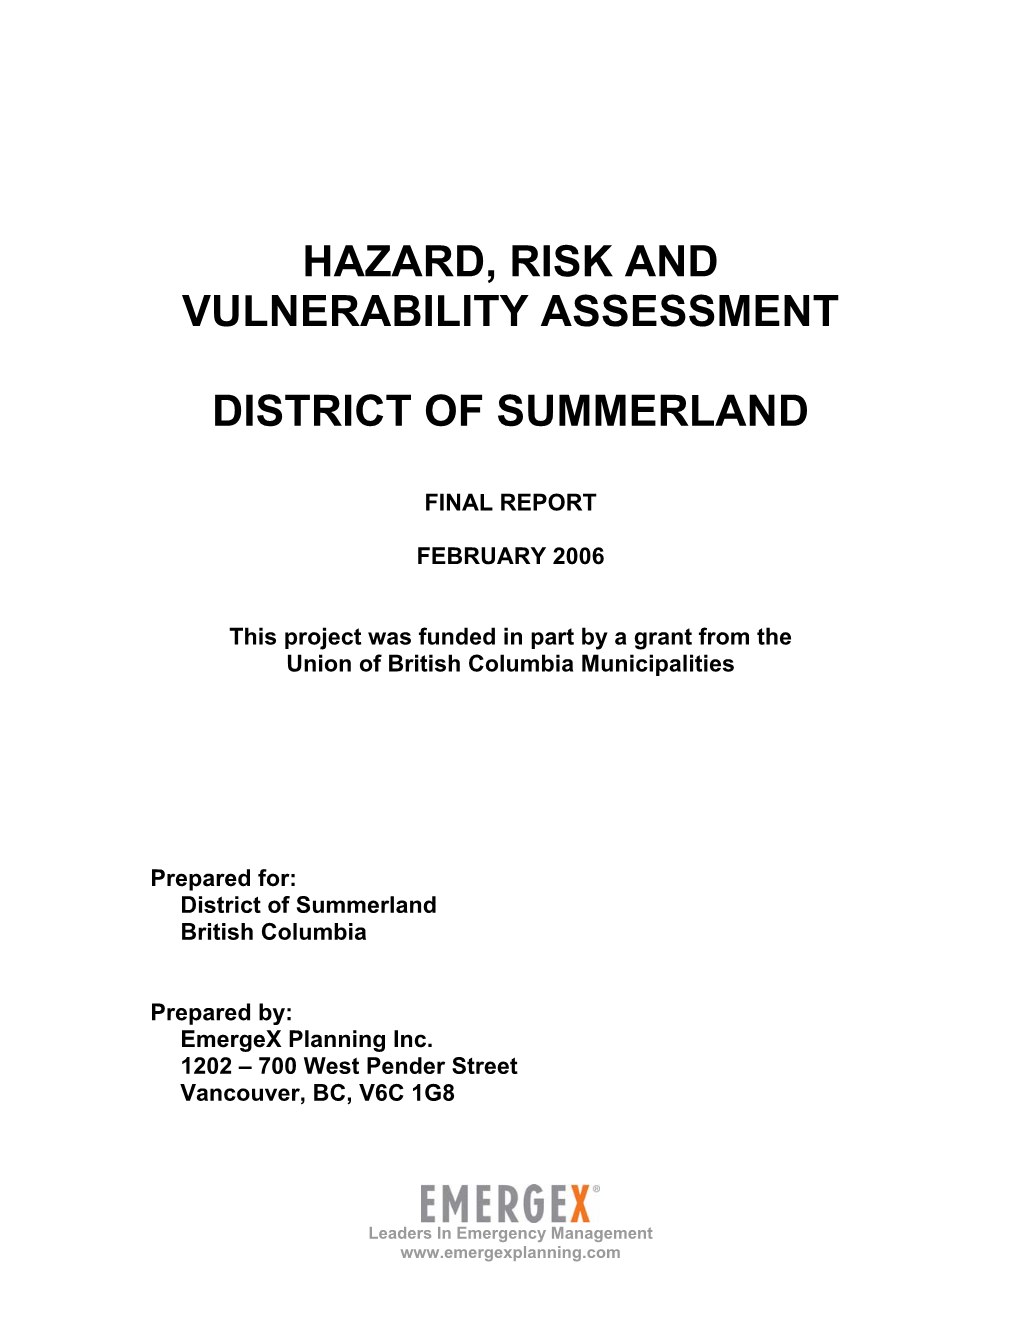 Summerland Hazard, Risk & Vulnerability Assessment Report